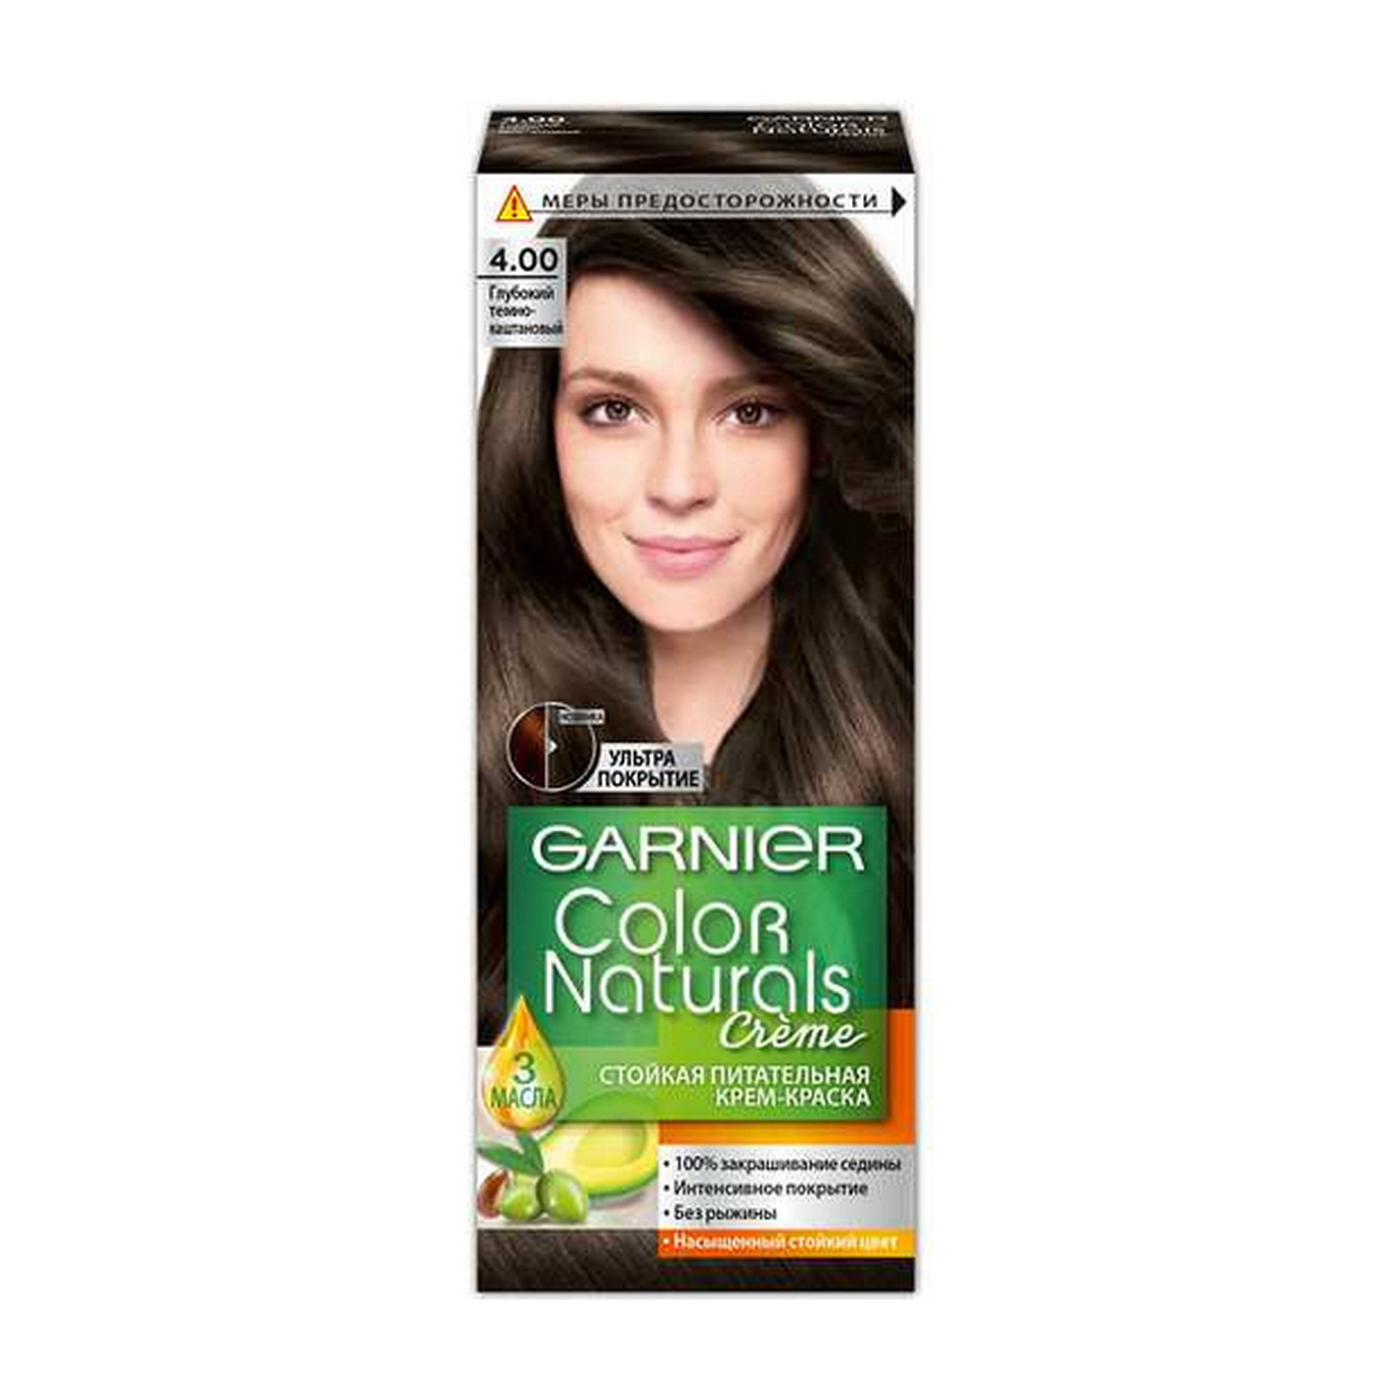 Тон краски garnier. Гарньер колор натуралс. Краска для волос Garnier Color naturals. Краска Garnier Color naturals 4.12. Гарньер краска для волос 4.0.